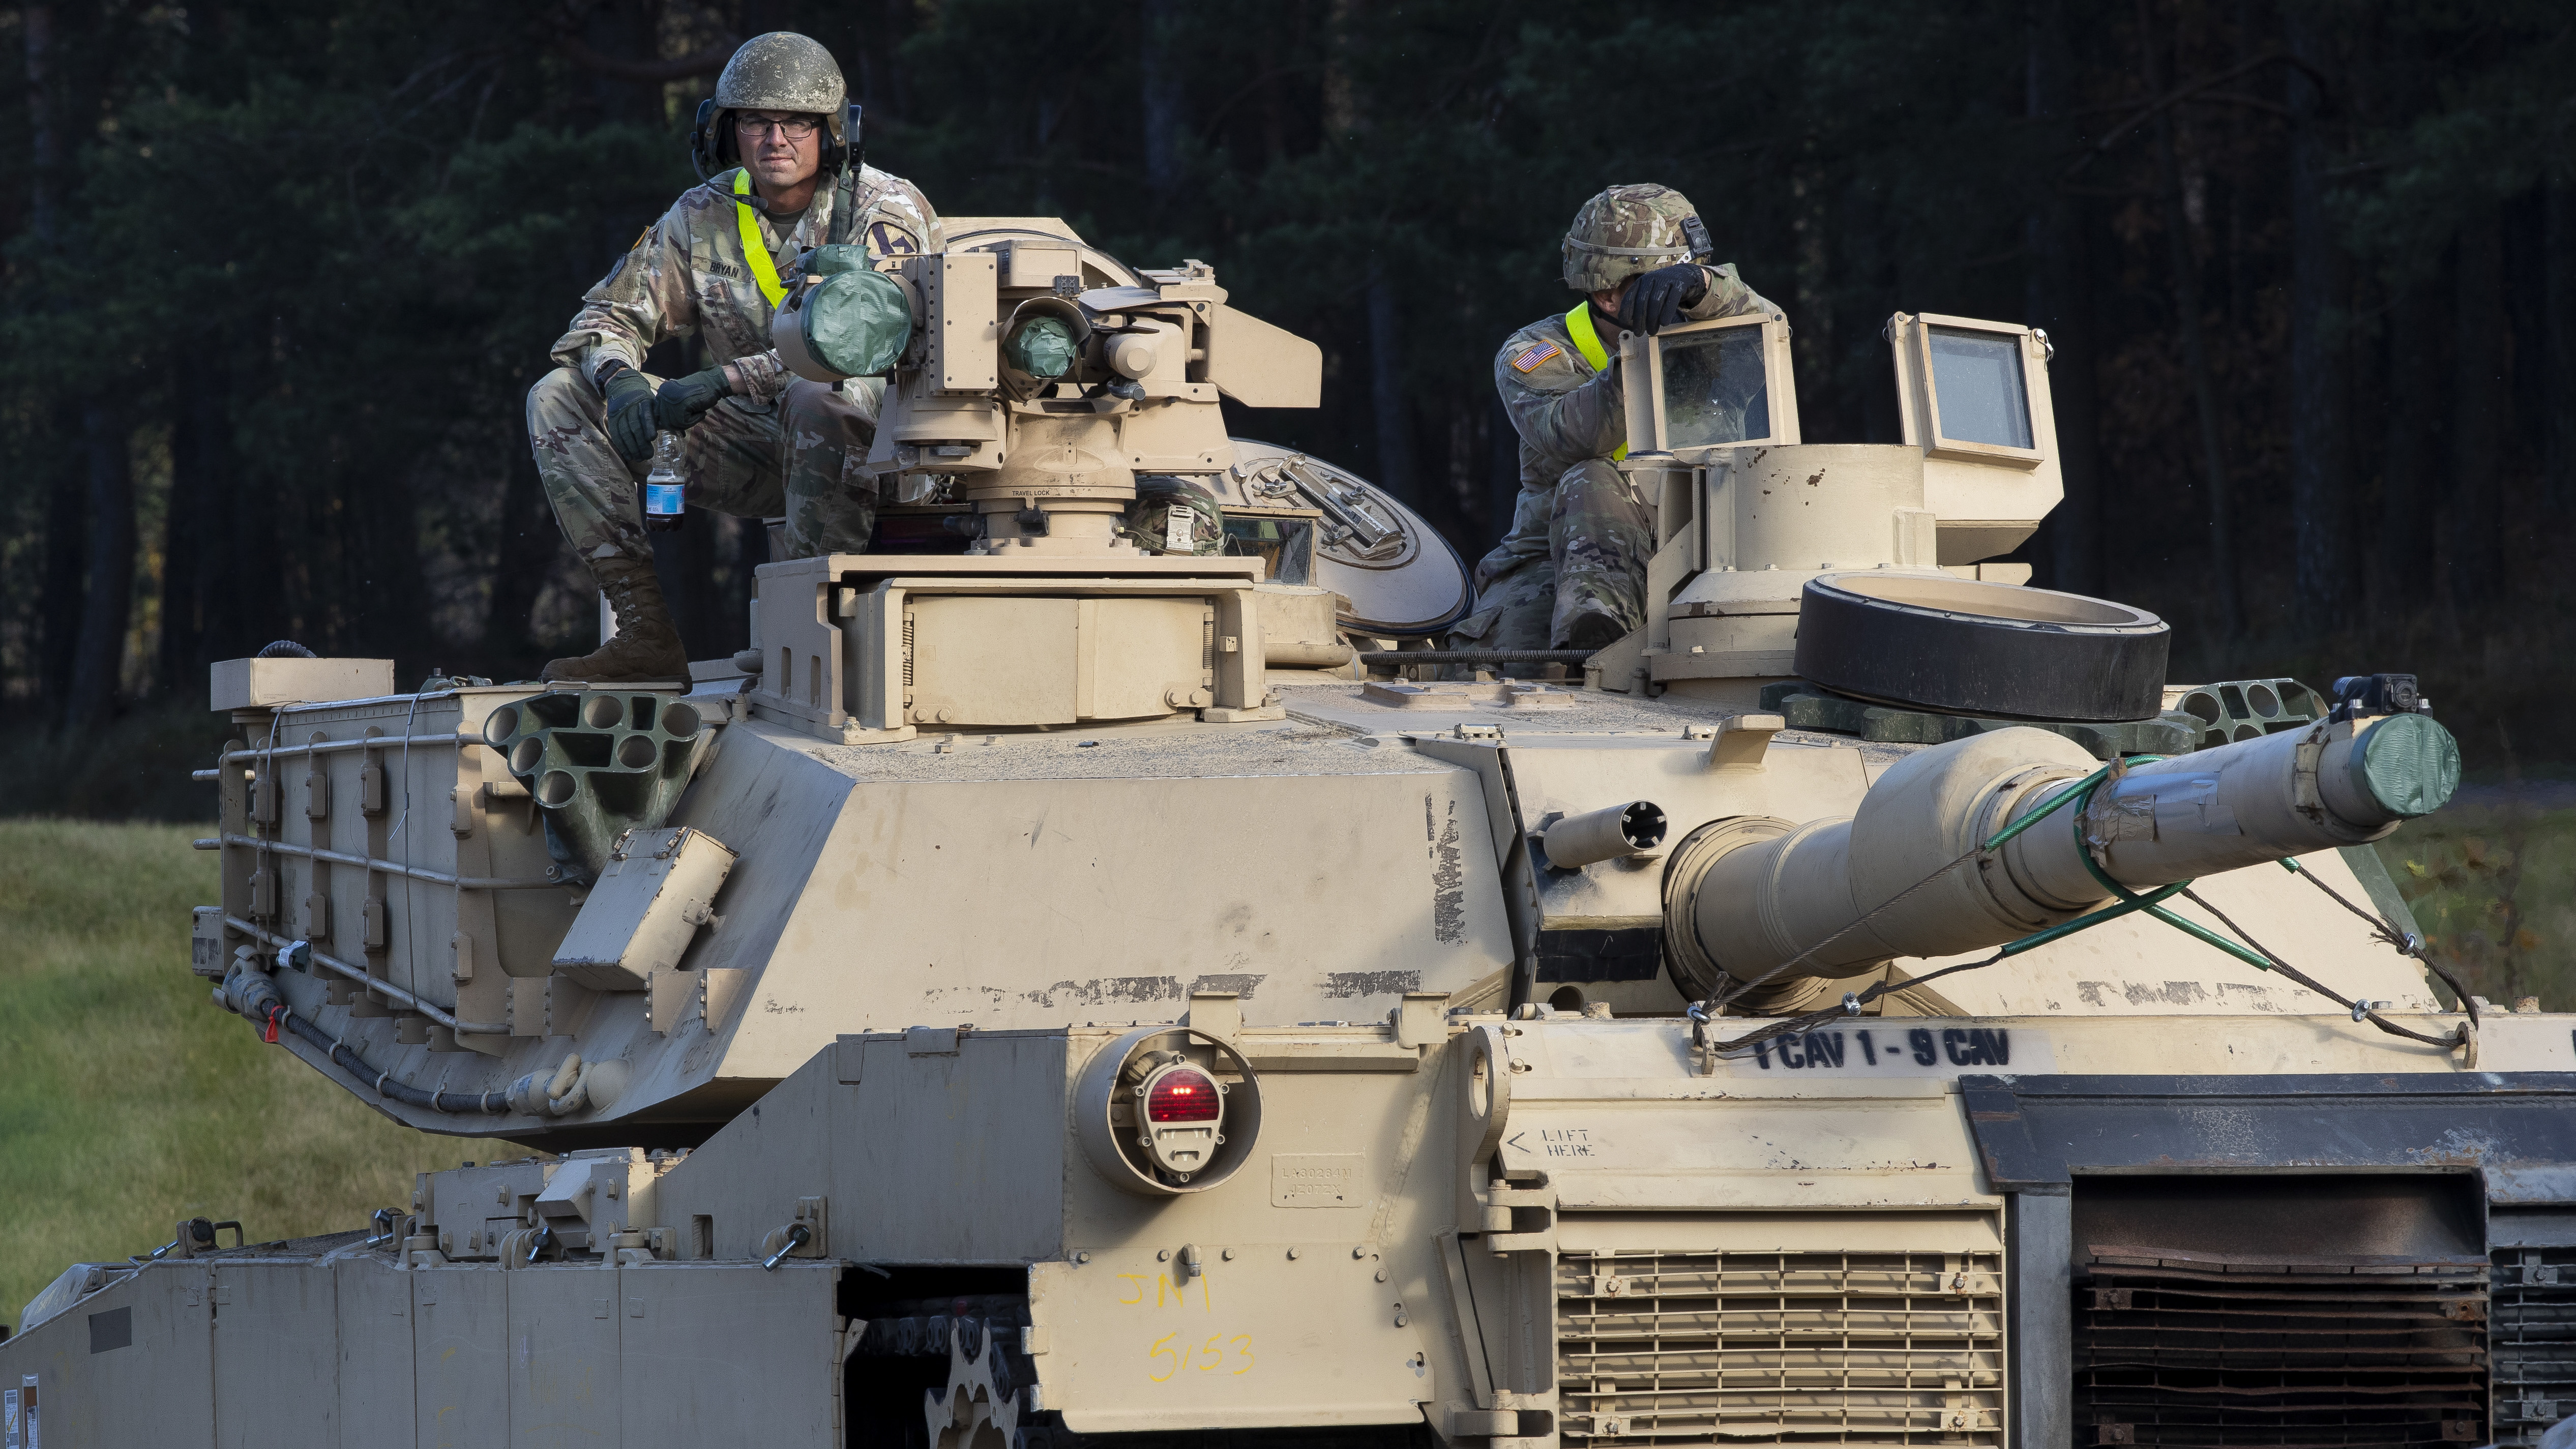 Army Tank - Military Presentos